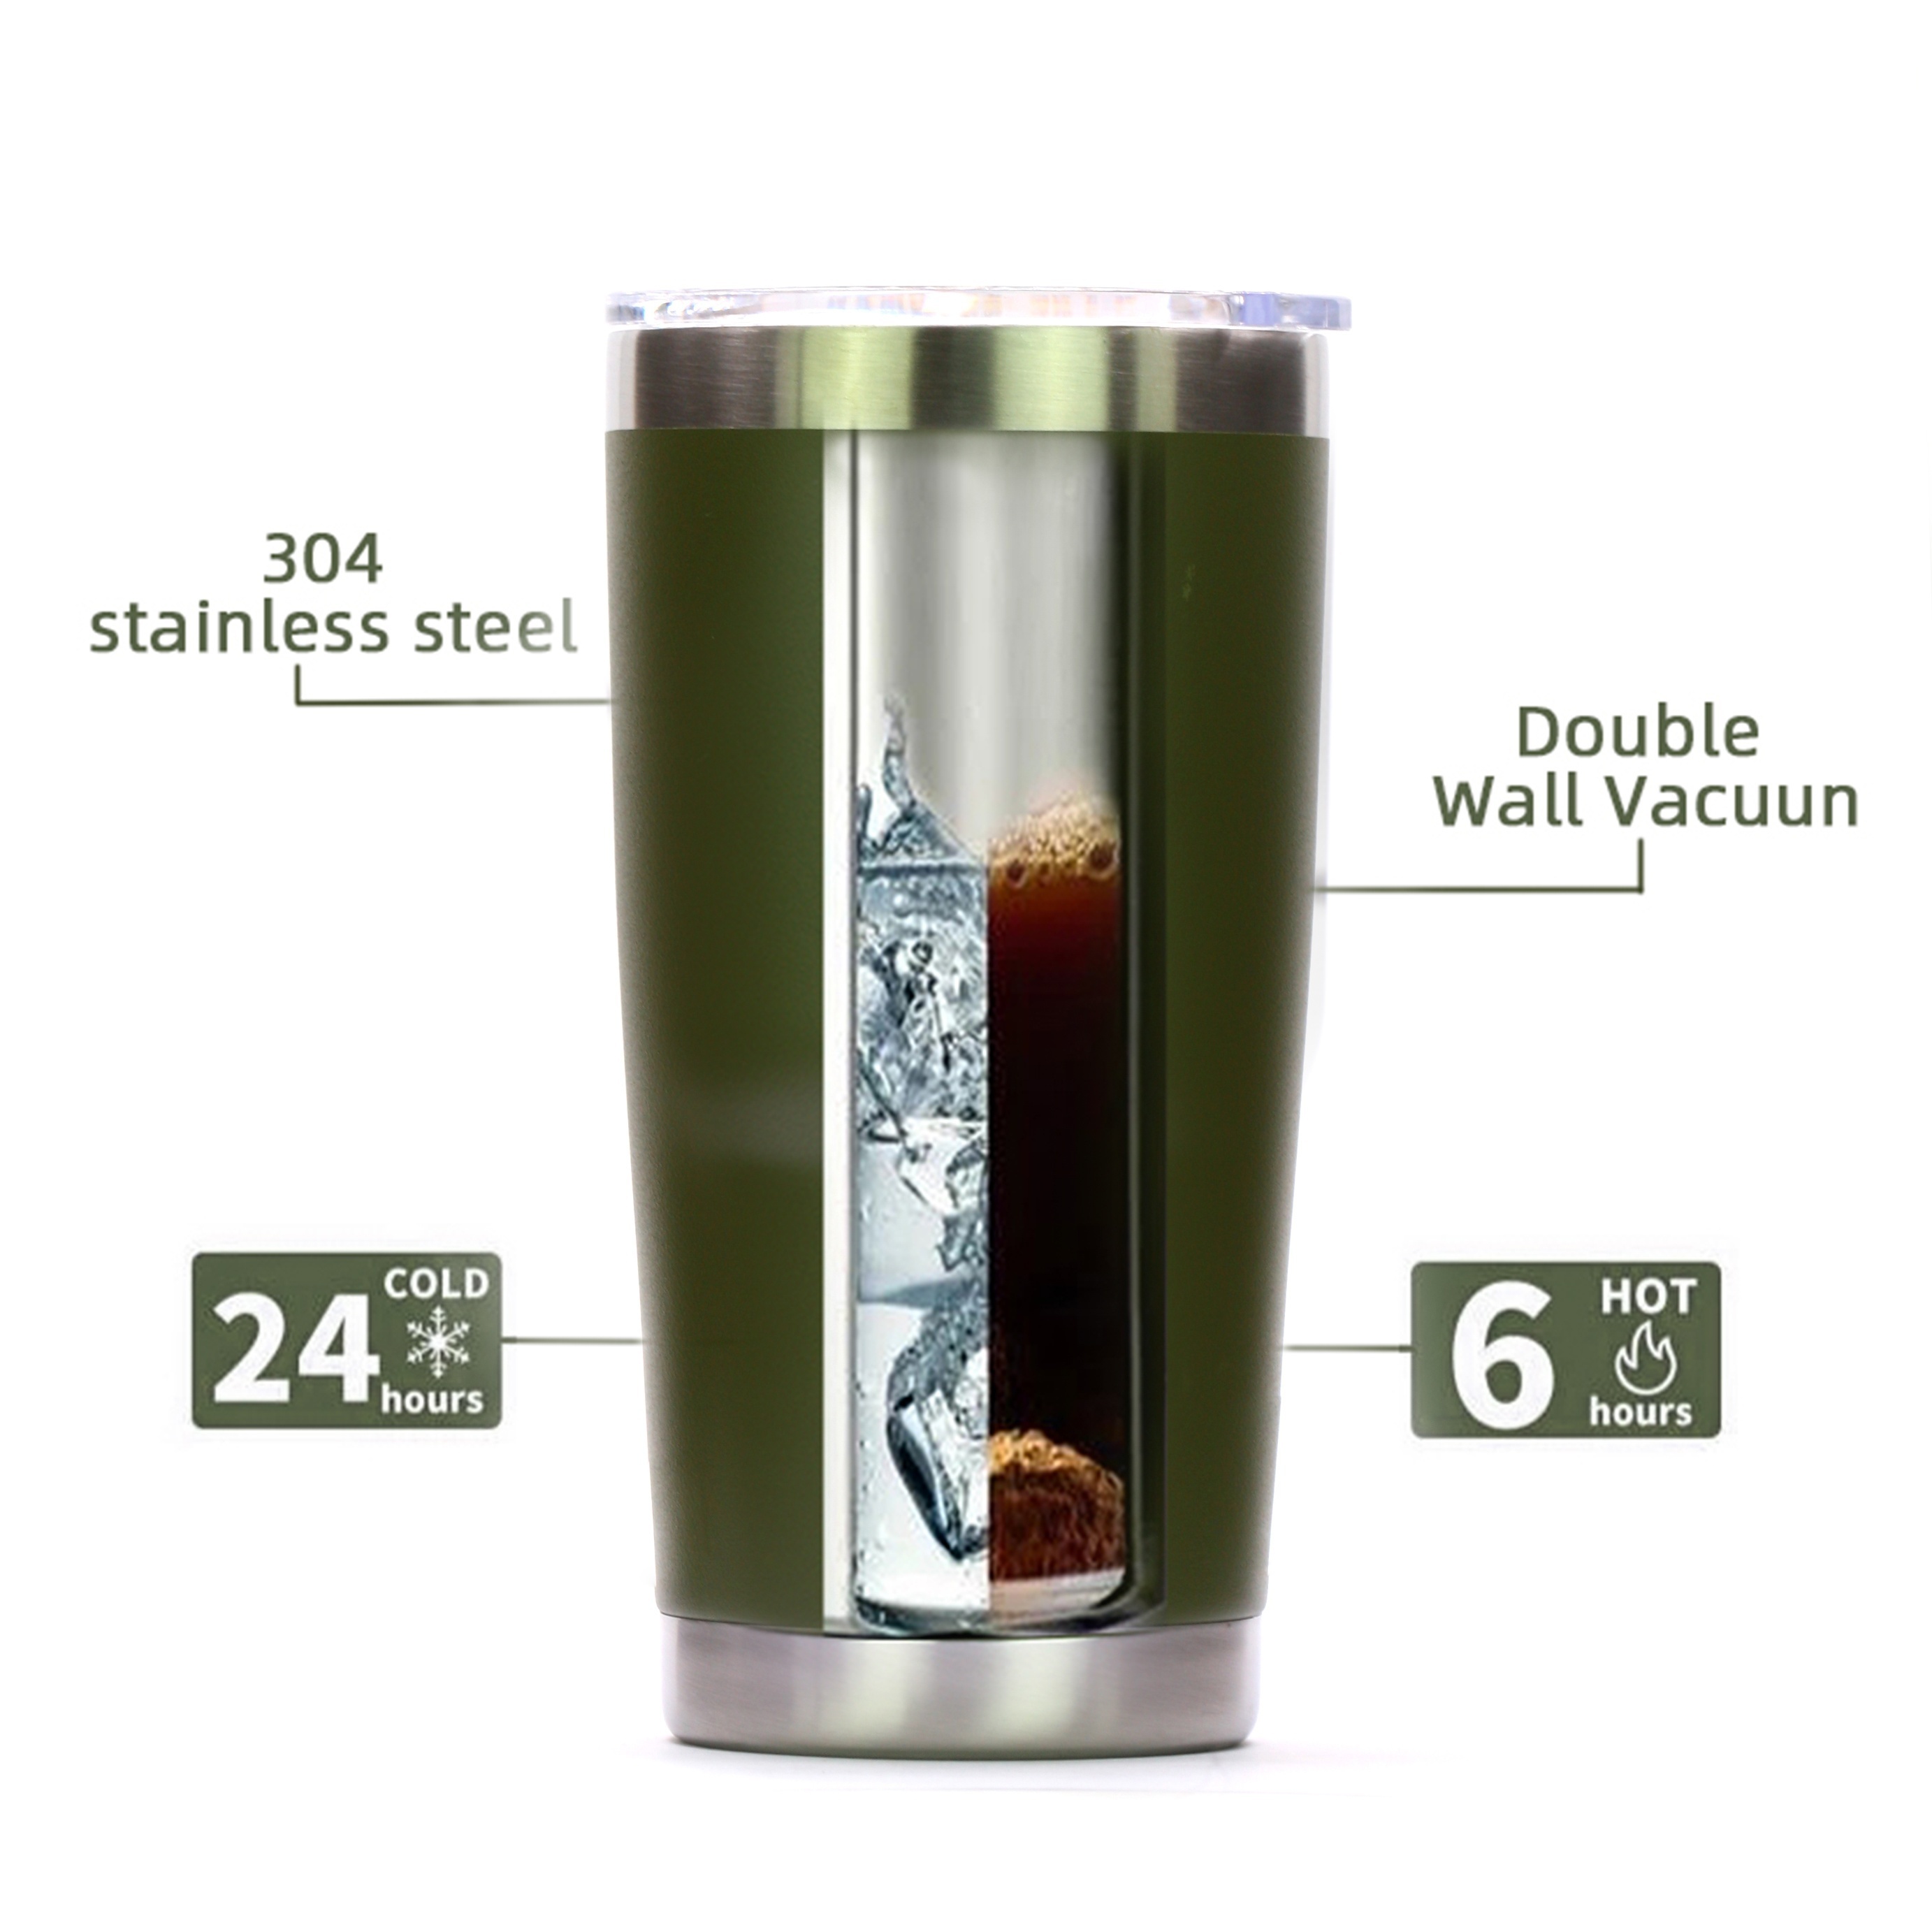 Travel Coffee Cup Mug Tumbler - 20 oz - Stainless Steel Vacuum